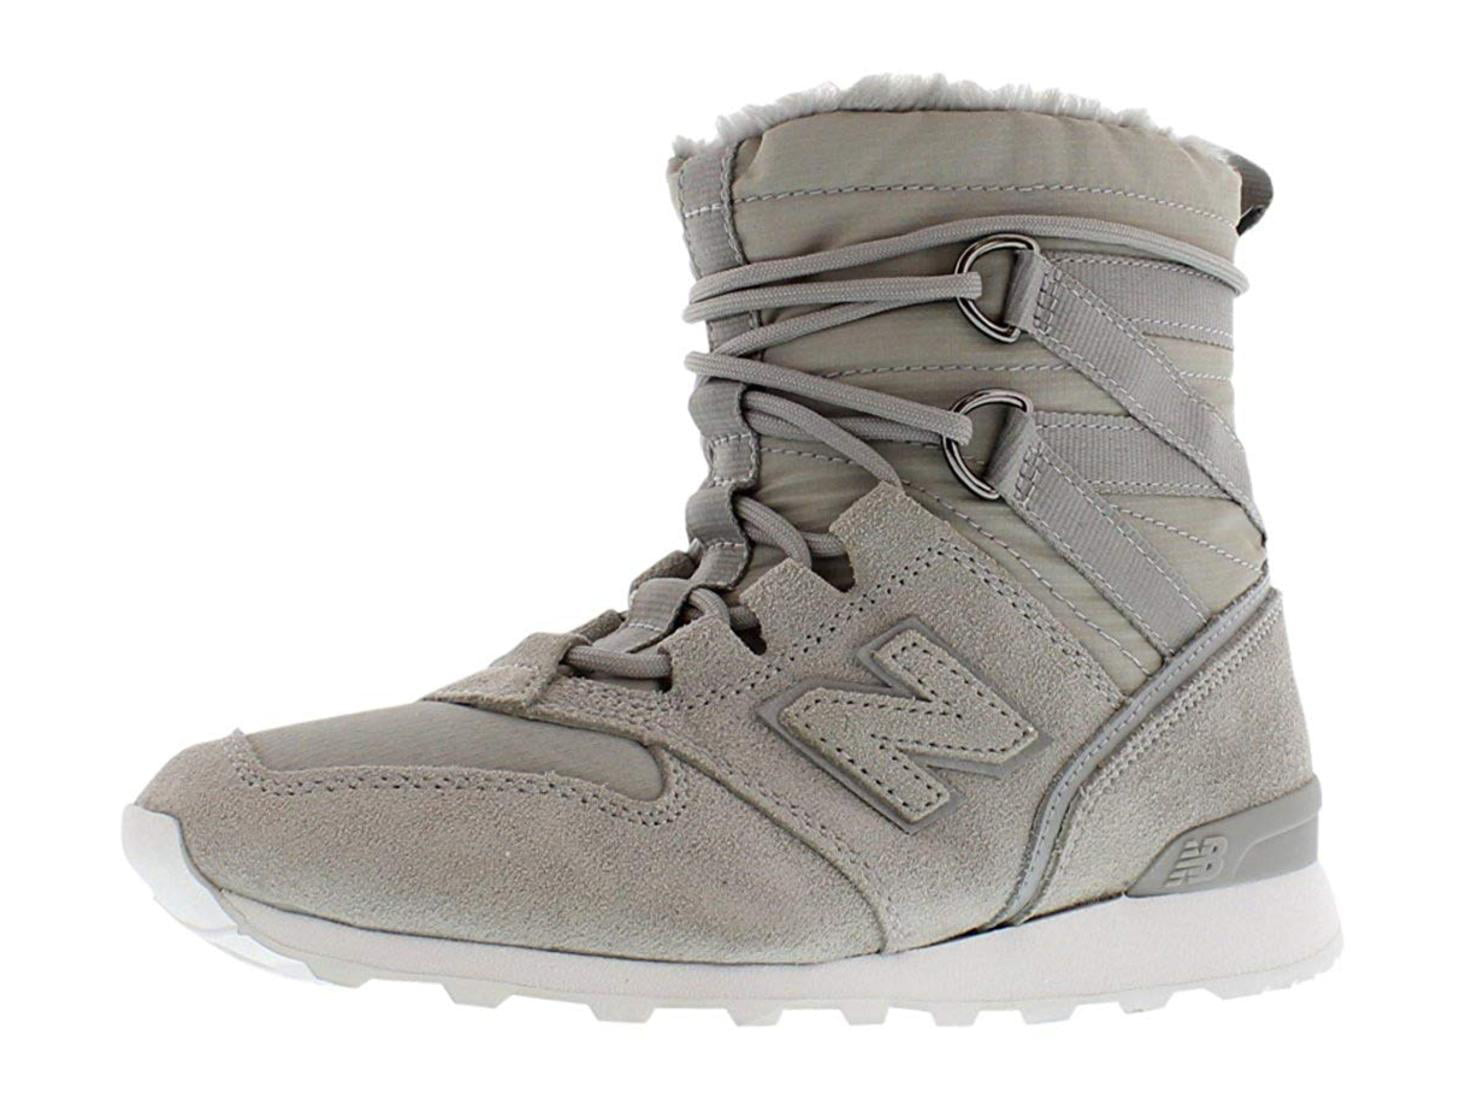 new balance 1100v1 winter boots - women's